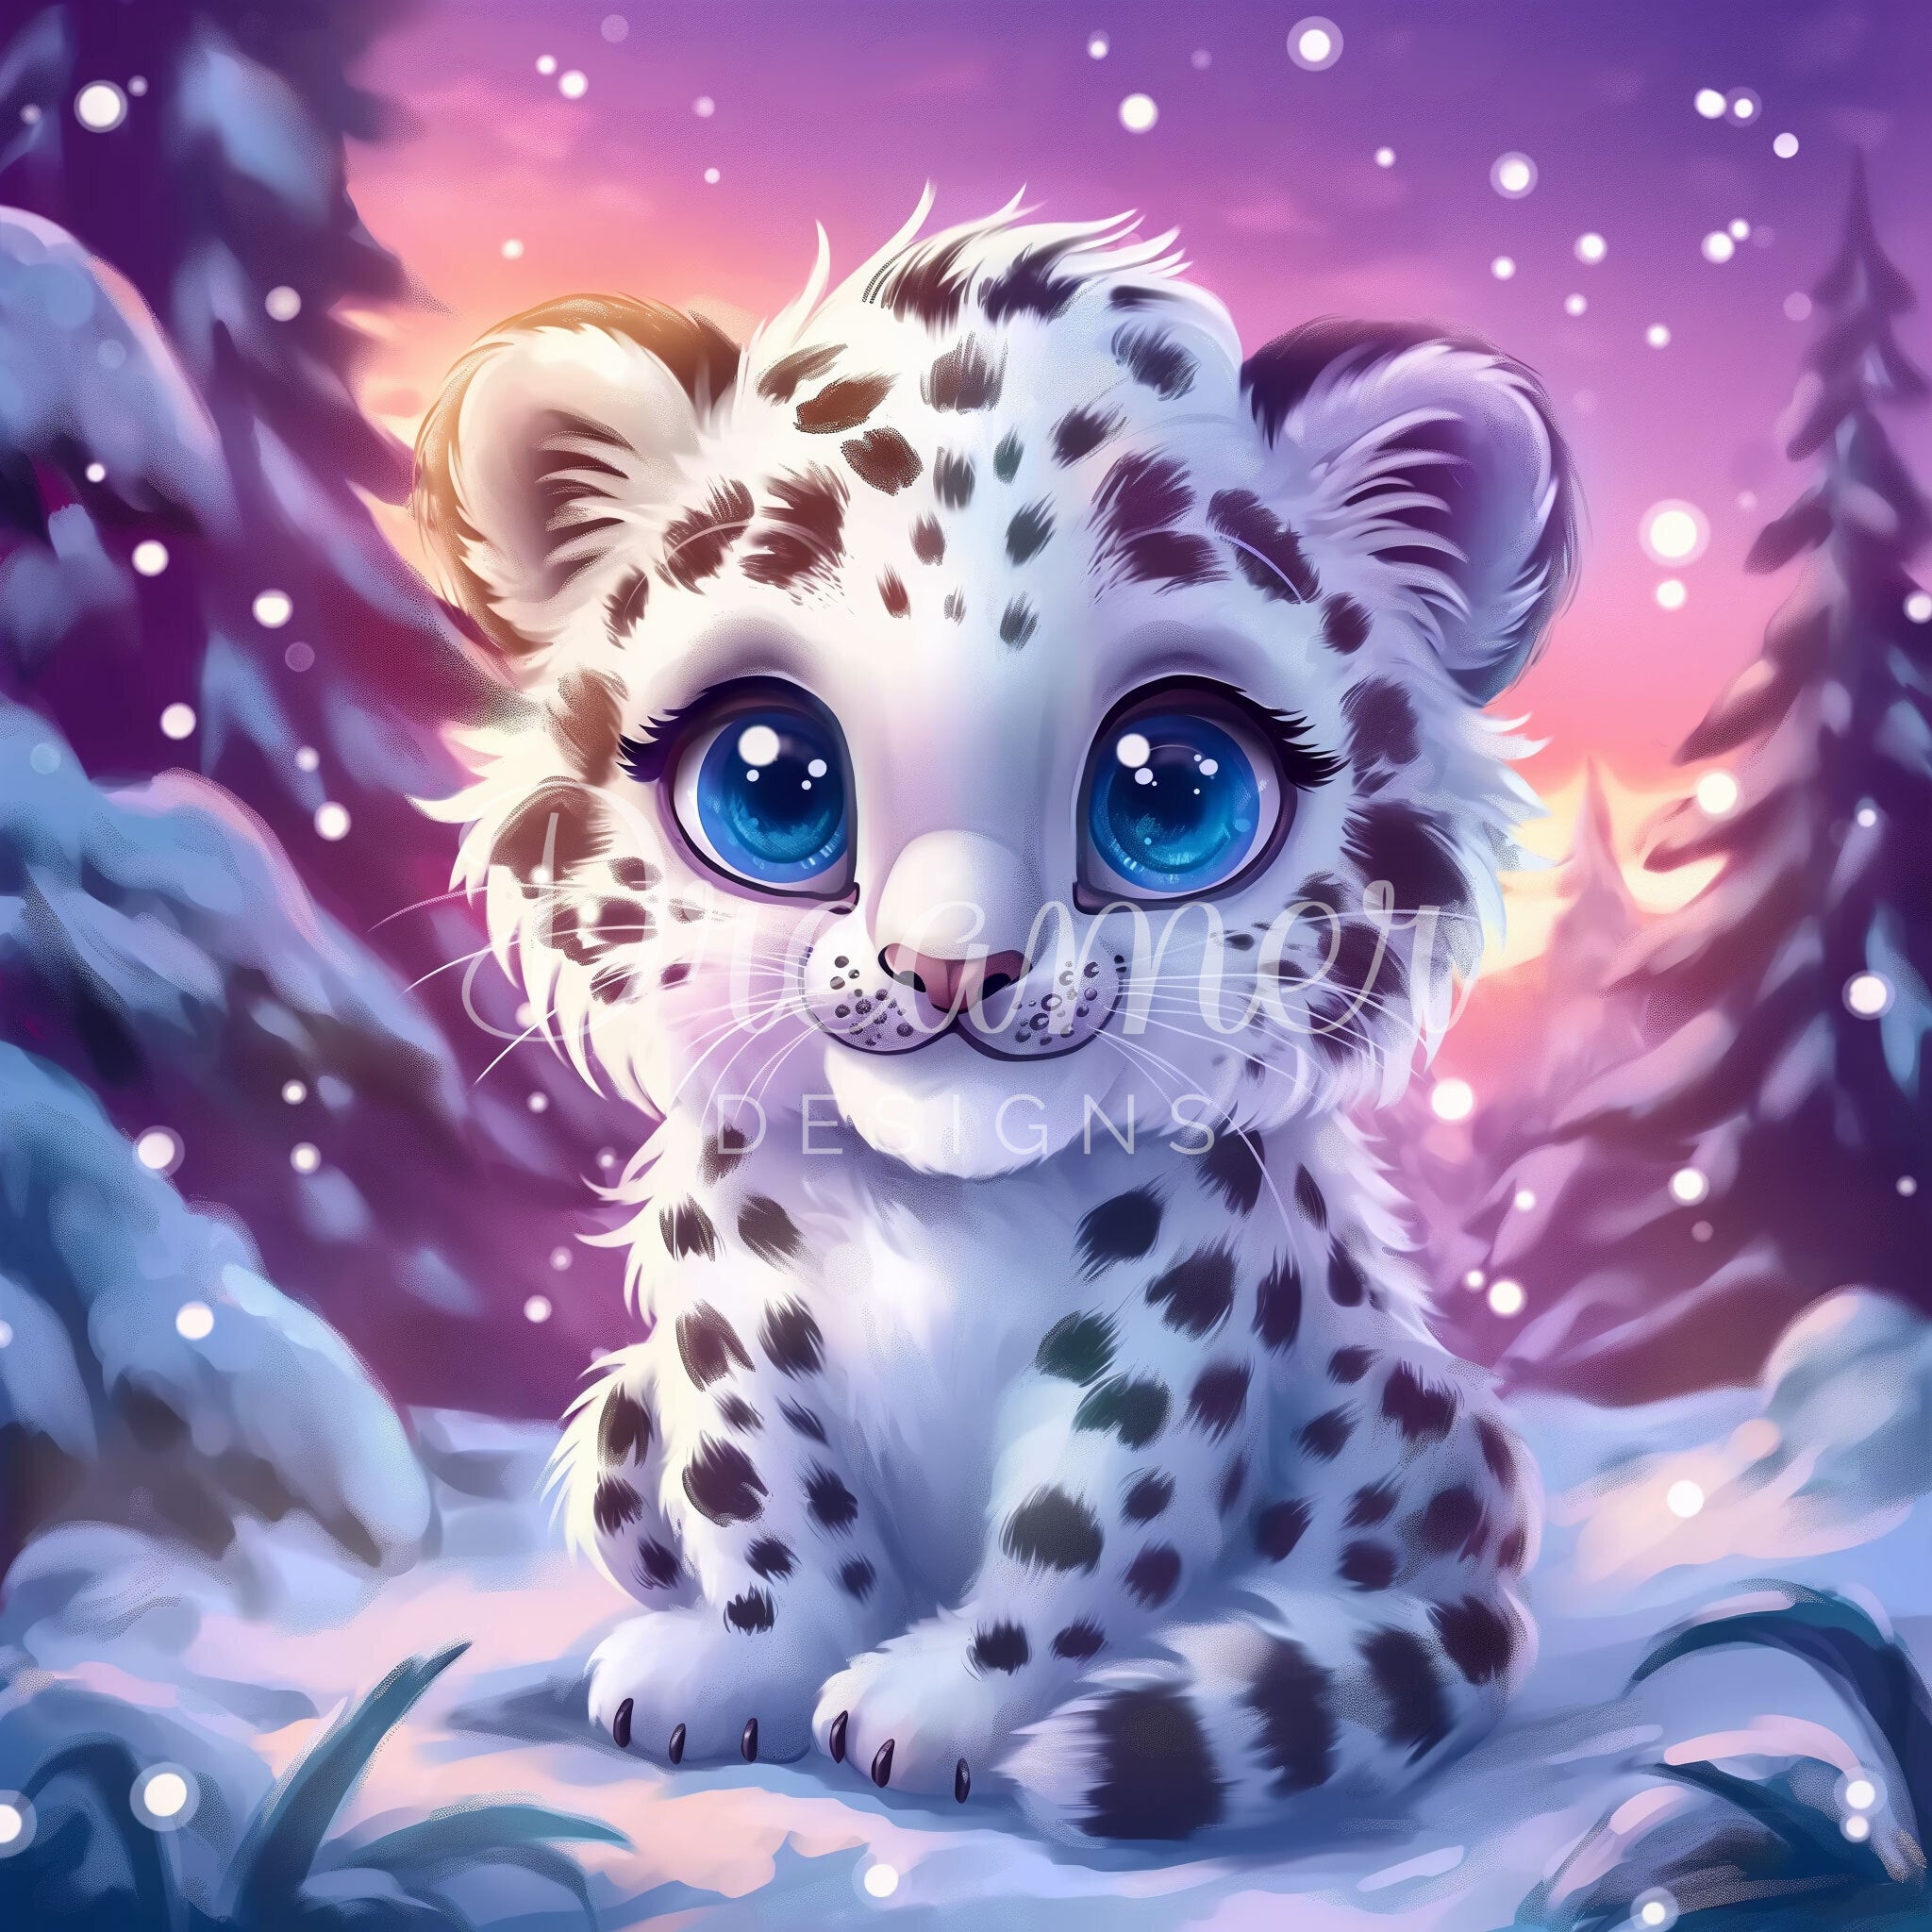 Snow Leopard Serenity